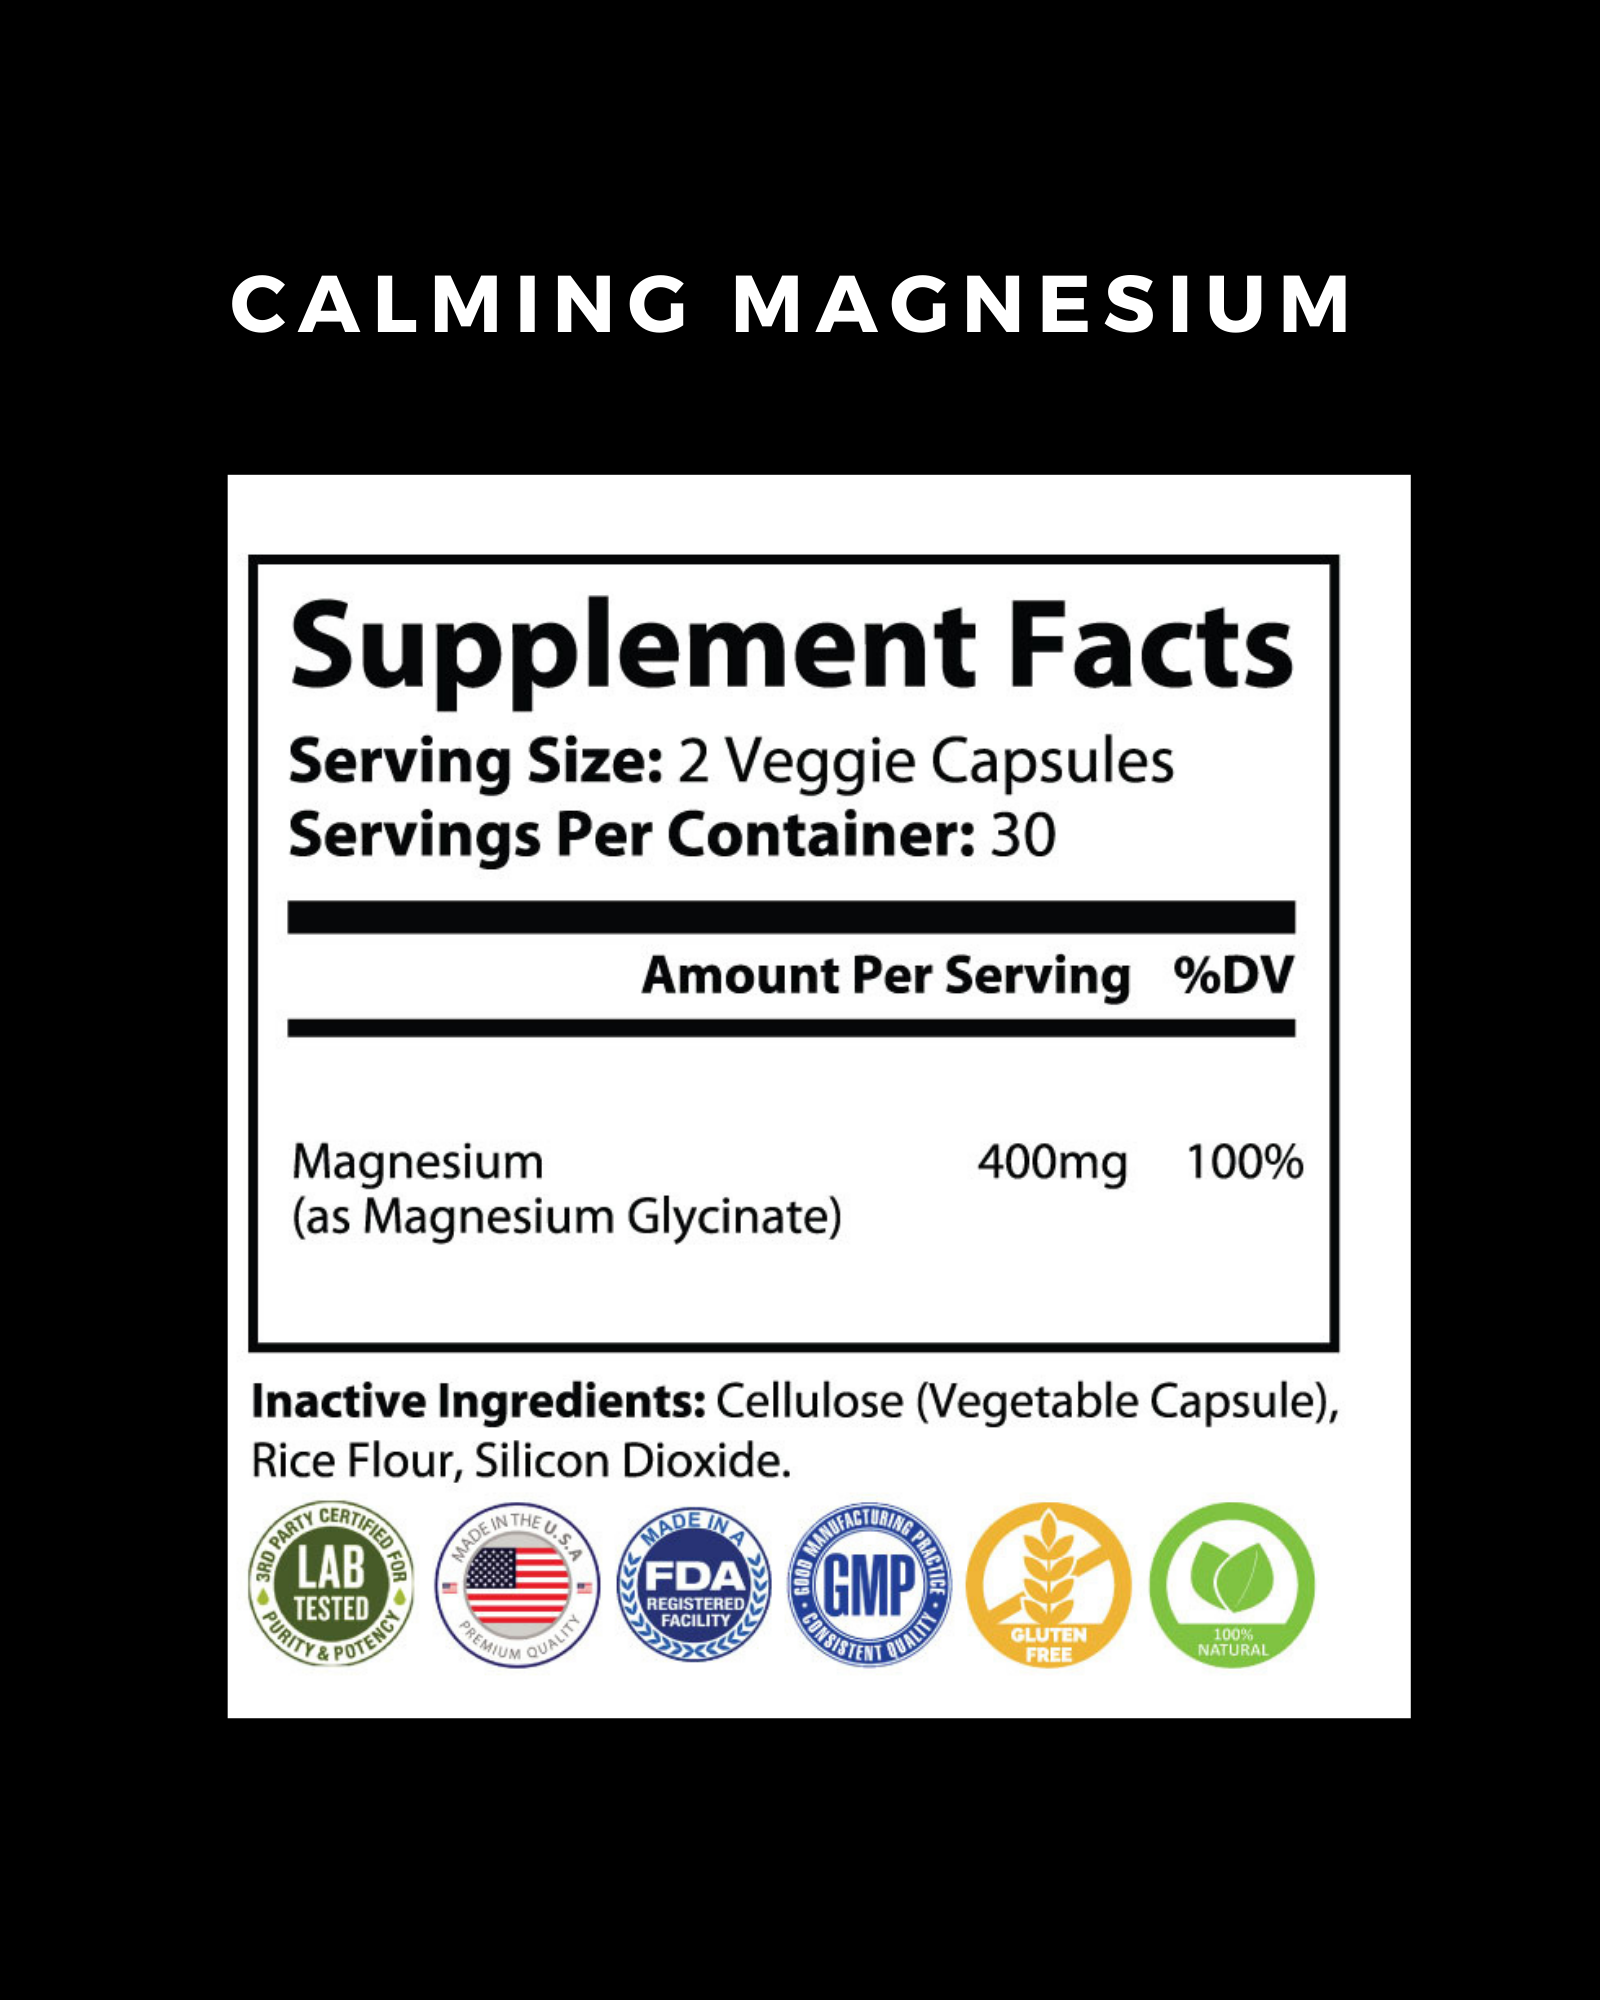 Vita Sharp Calming Magnesium